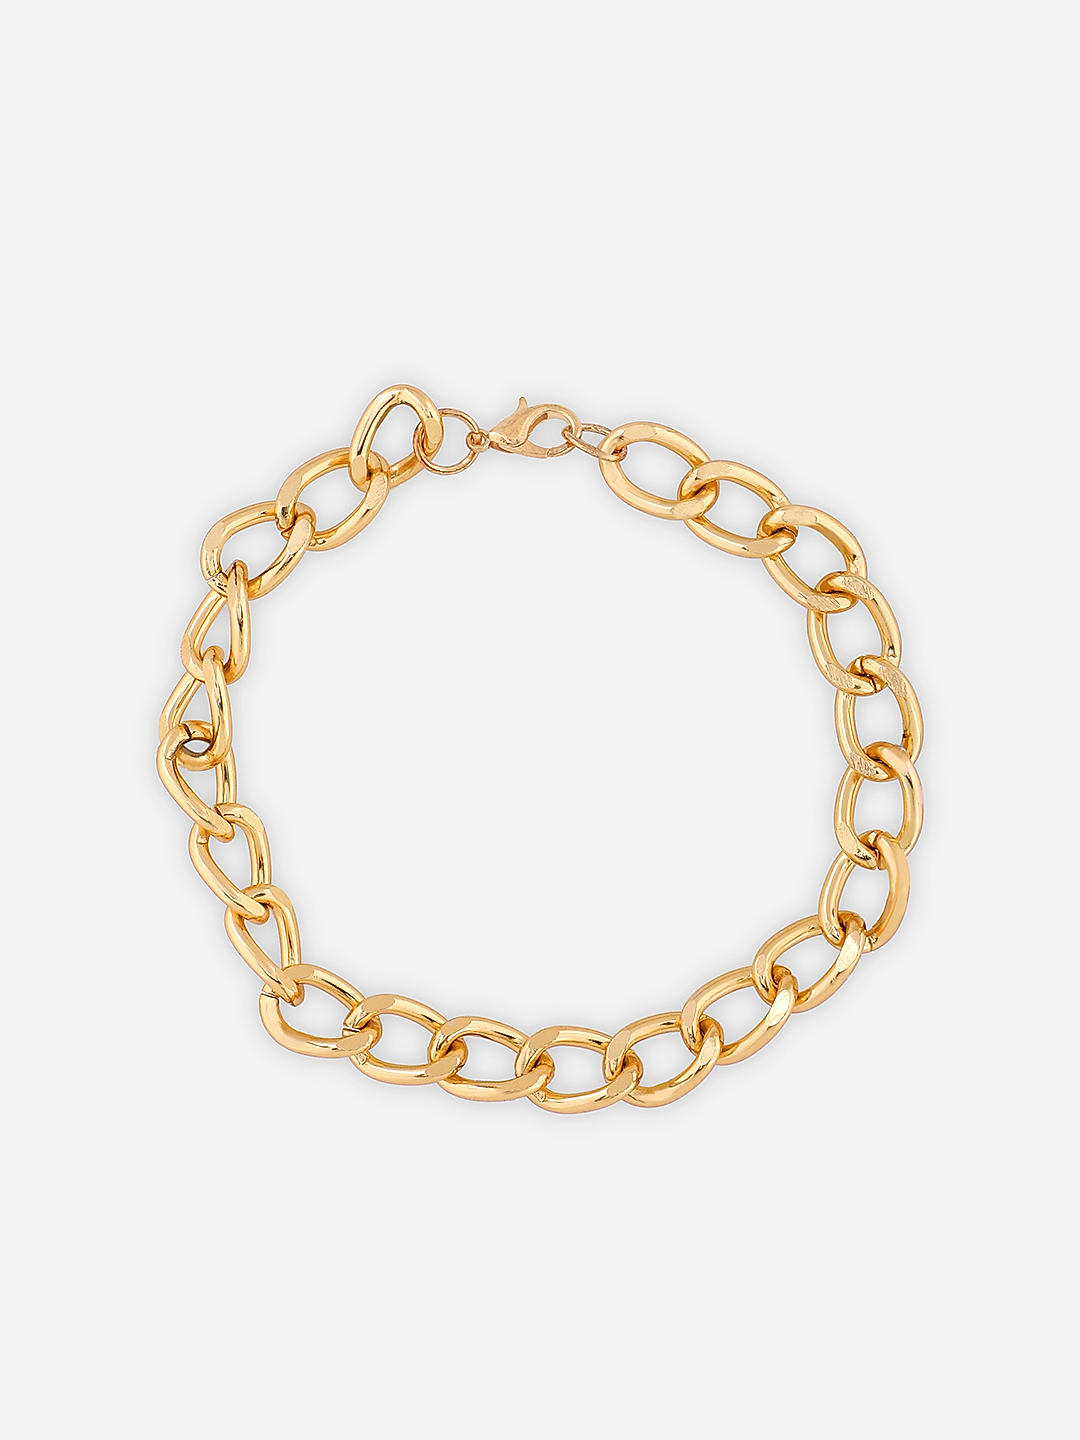 Bracelets - Shop Designer Jewelry | goop